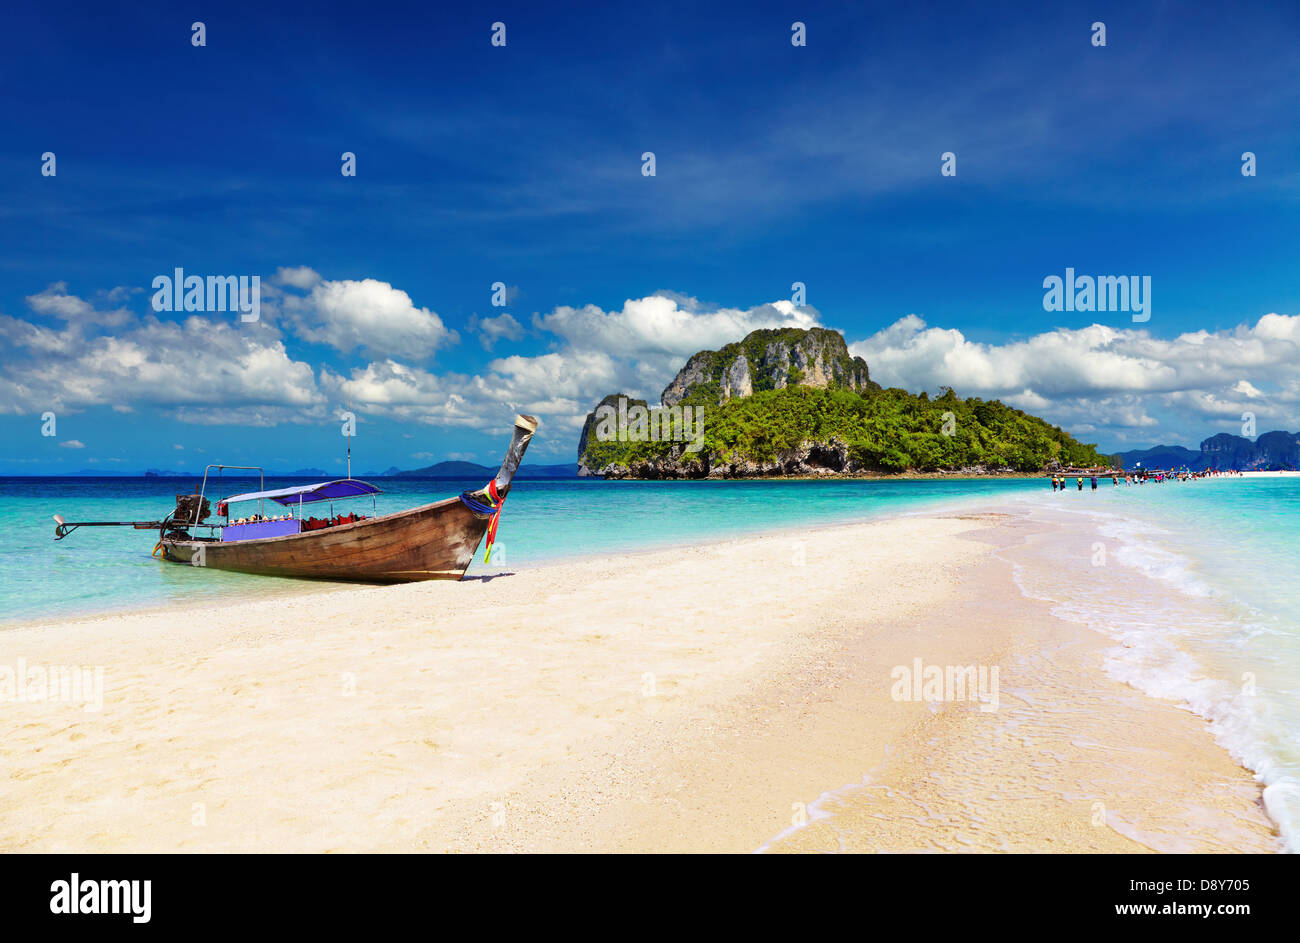 Playa Tropical, bañera, Isla del Mar de Andaman, Tailandia Foto de stock